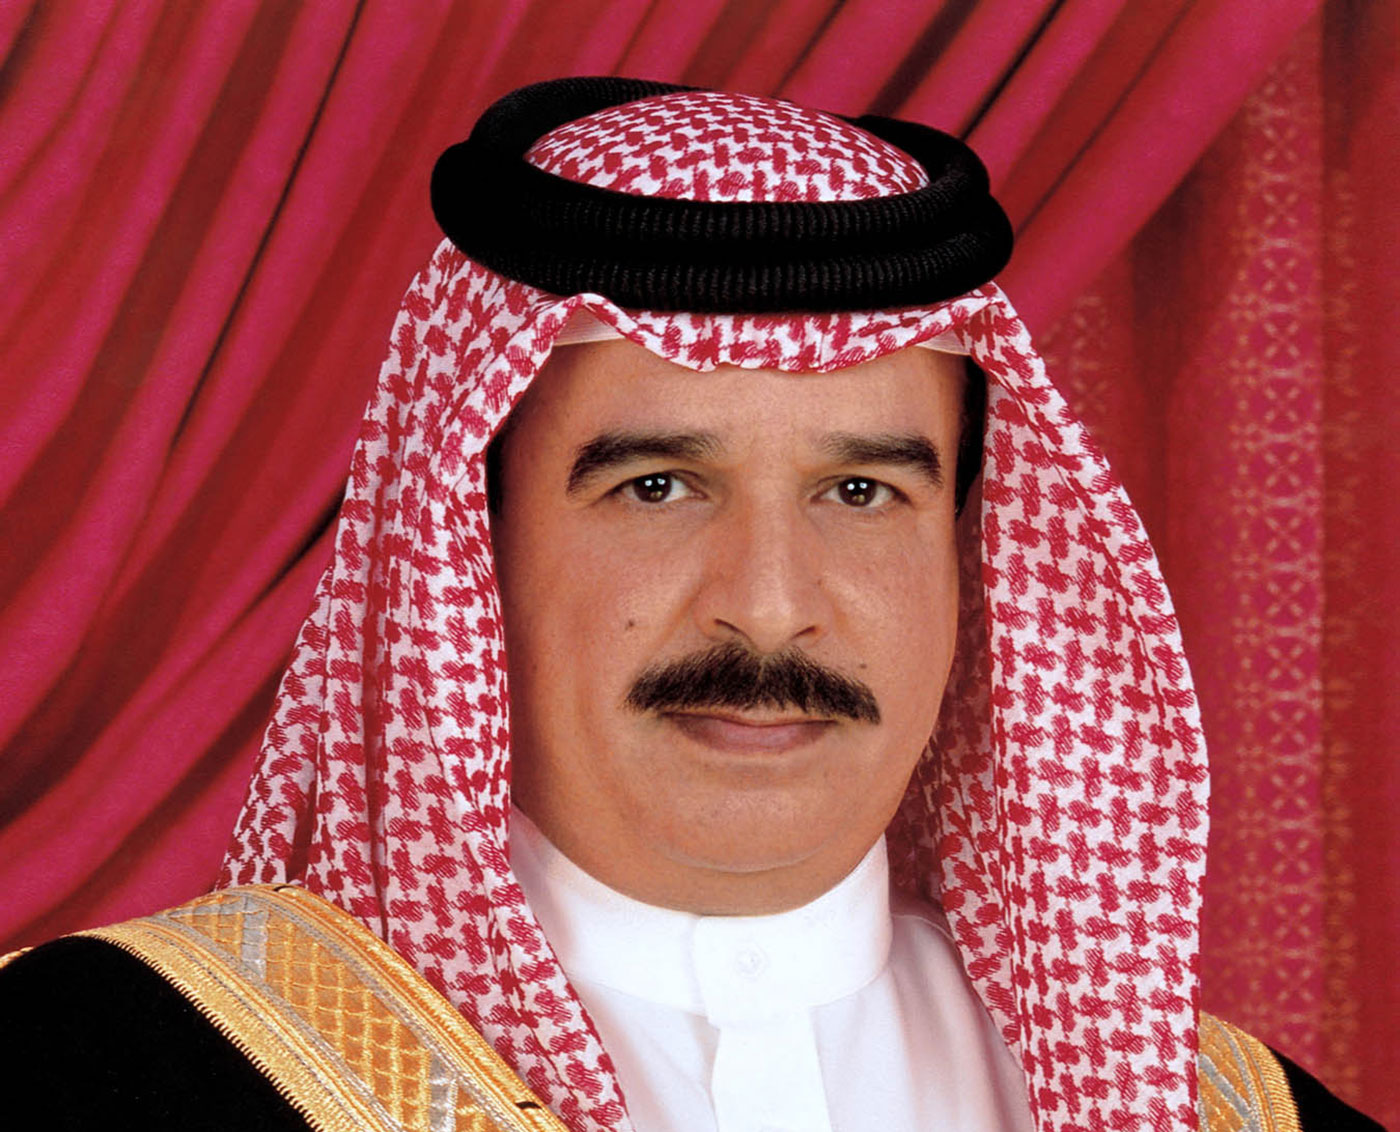 Хамада ибн ису аль халифу. Король Бахрейна Хамад Аль Халиф. Королm Бахрейна Хамада Бен Исы Аль Халифы.